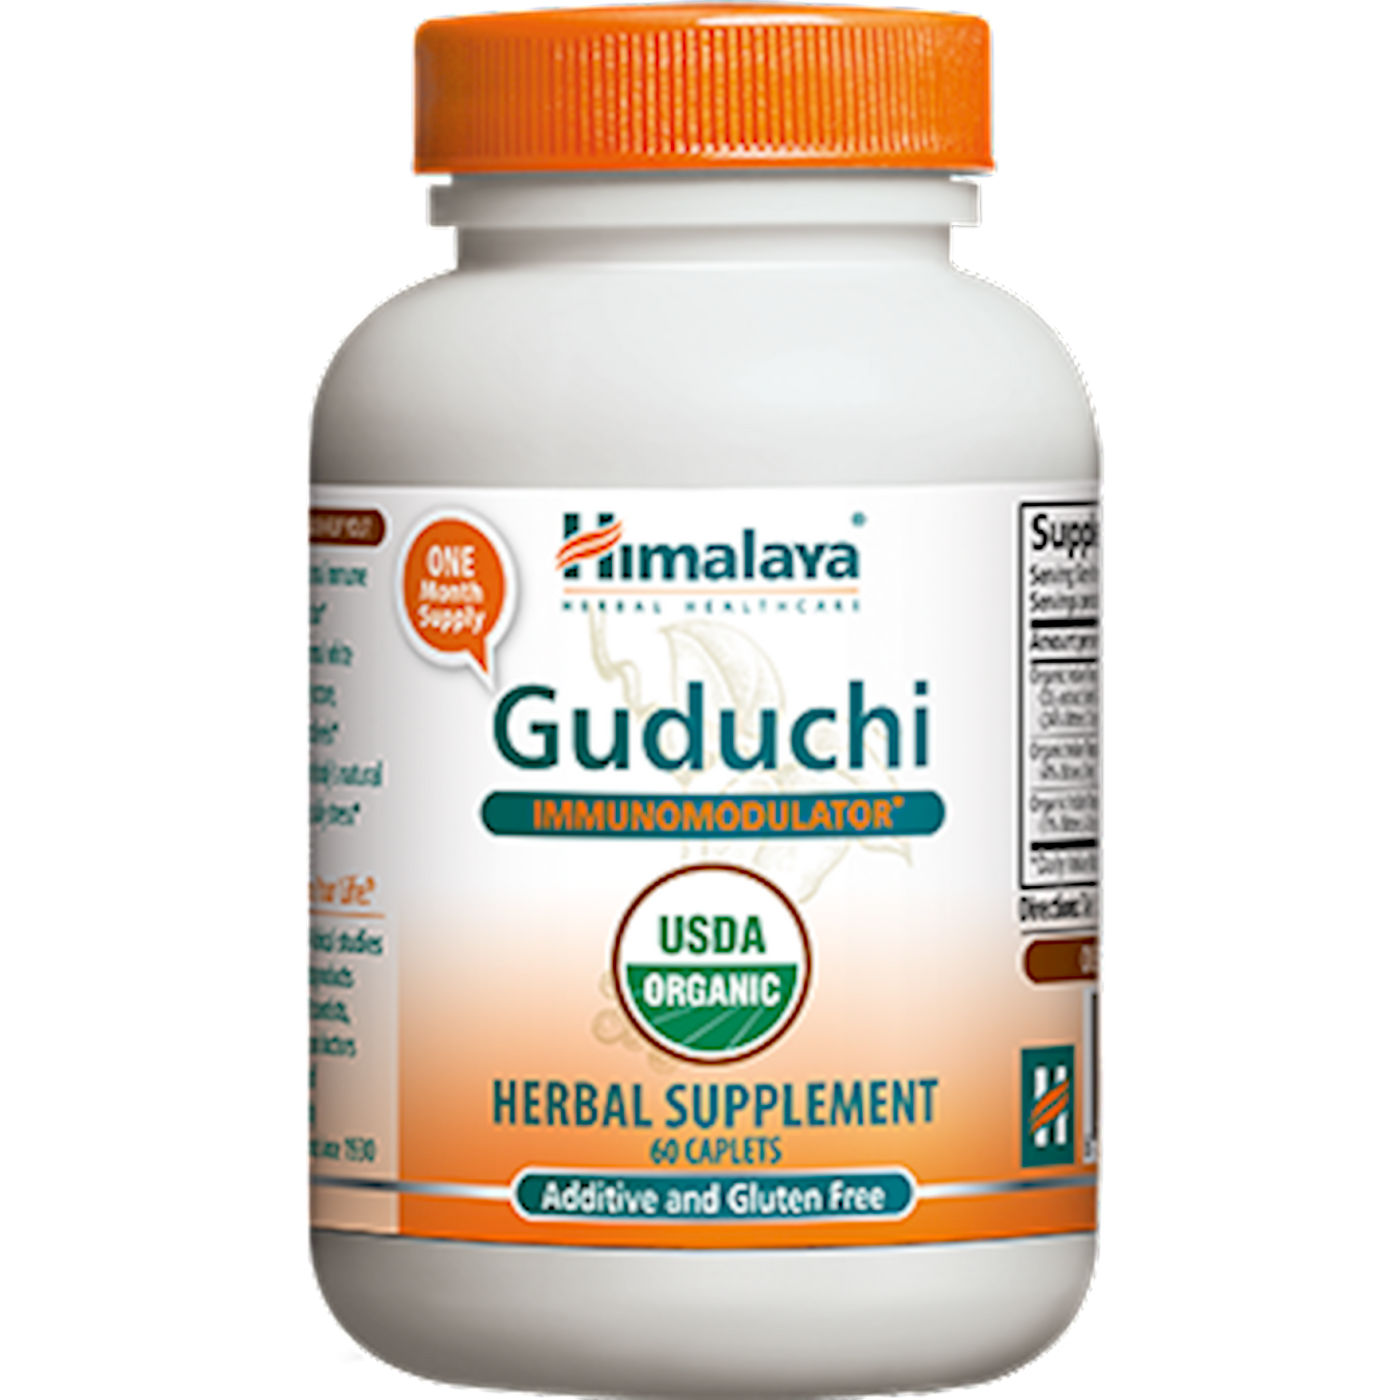 Guduchi s Curated Wellness